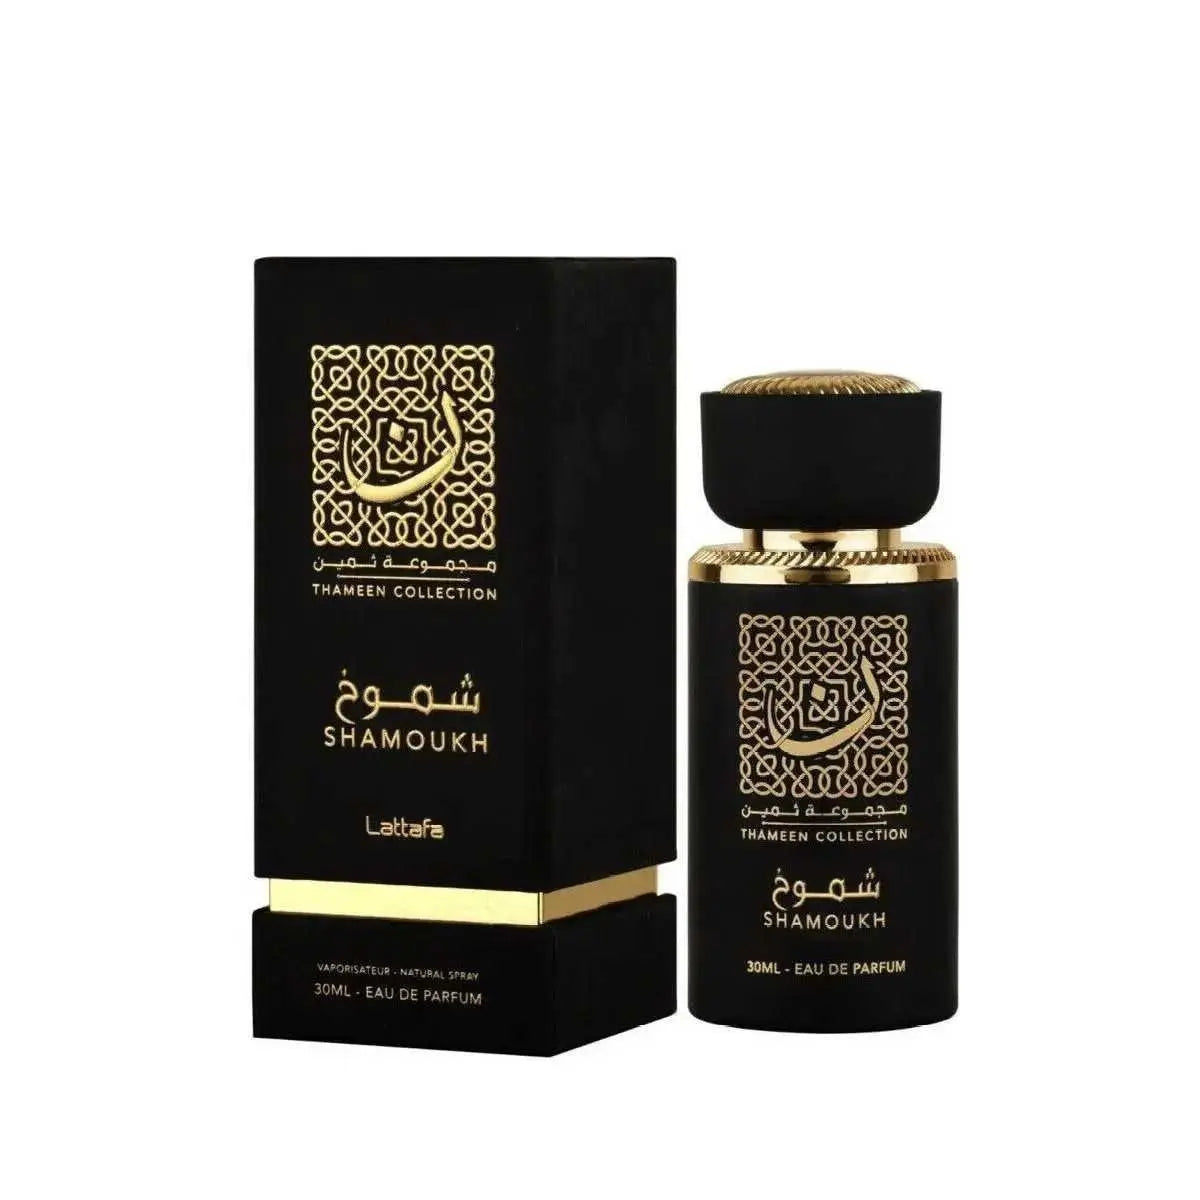 Shamoukh Perfume 30ml EDP Thameen Collection By Lattafa